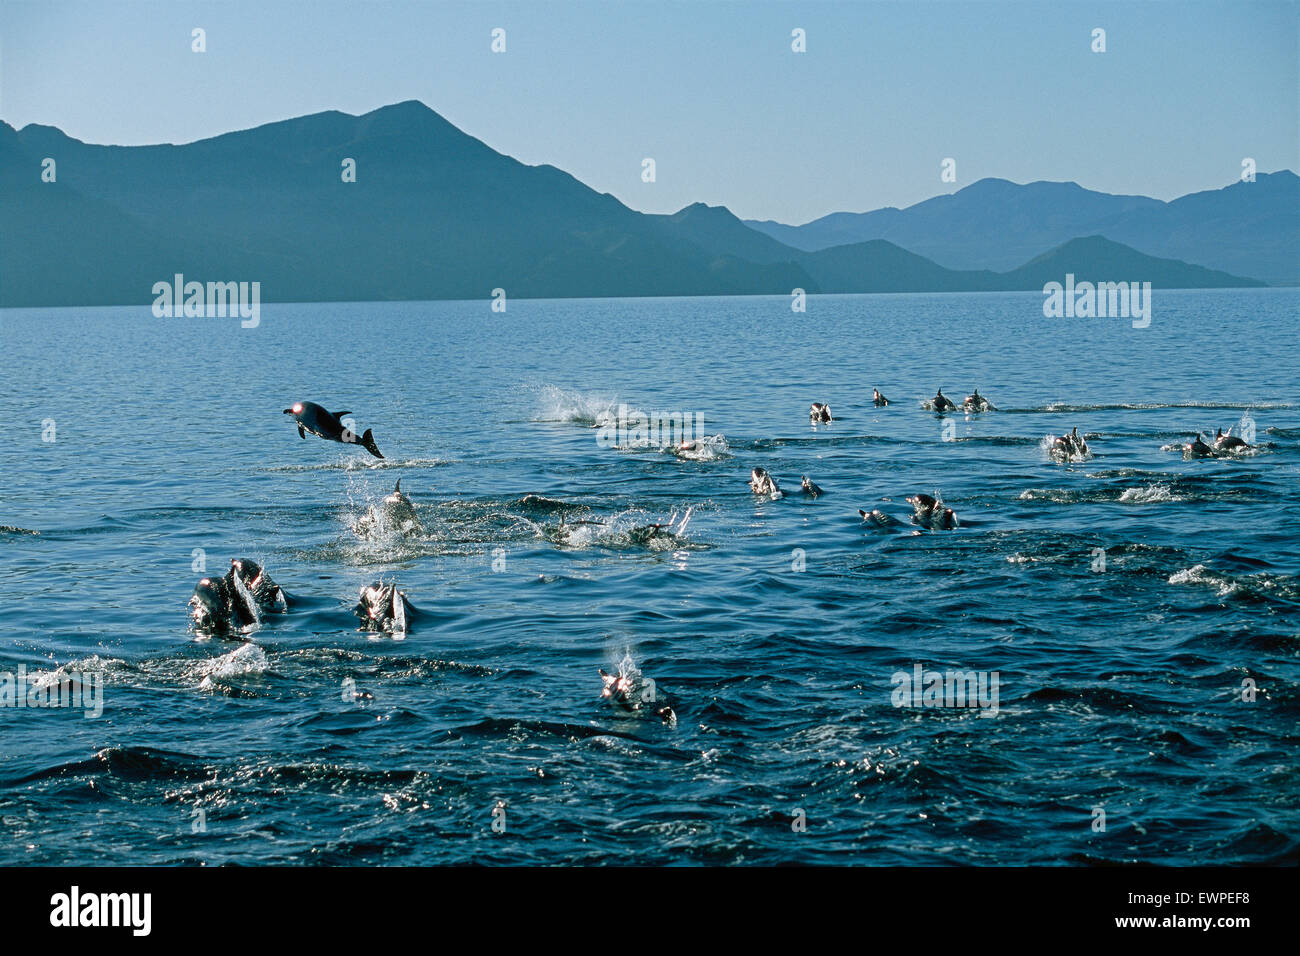 A school of dolphin herding fish Stock Photo